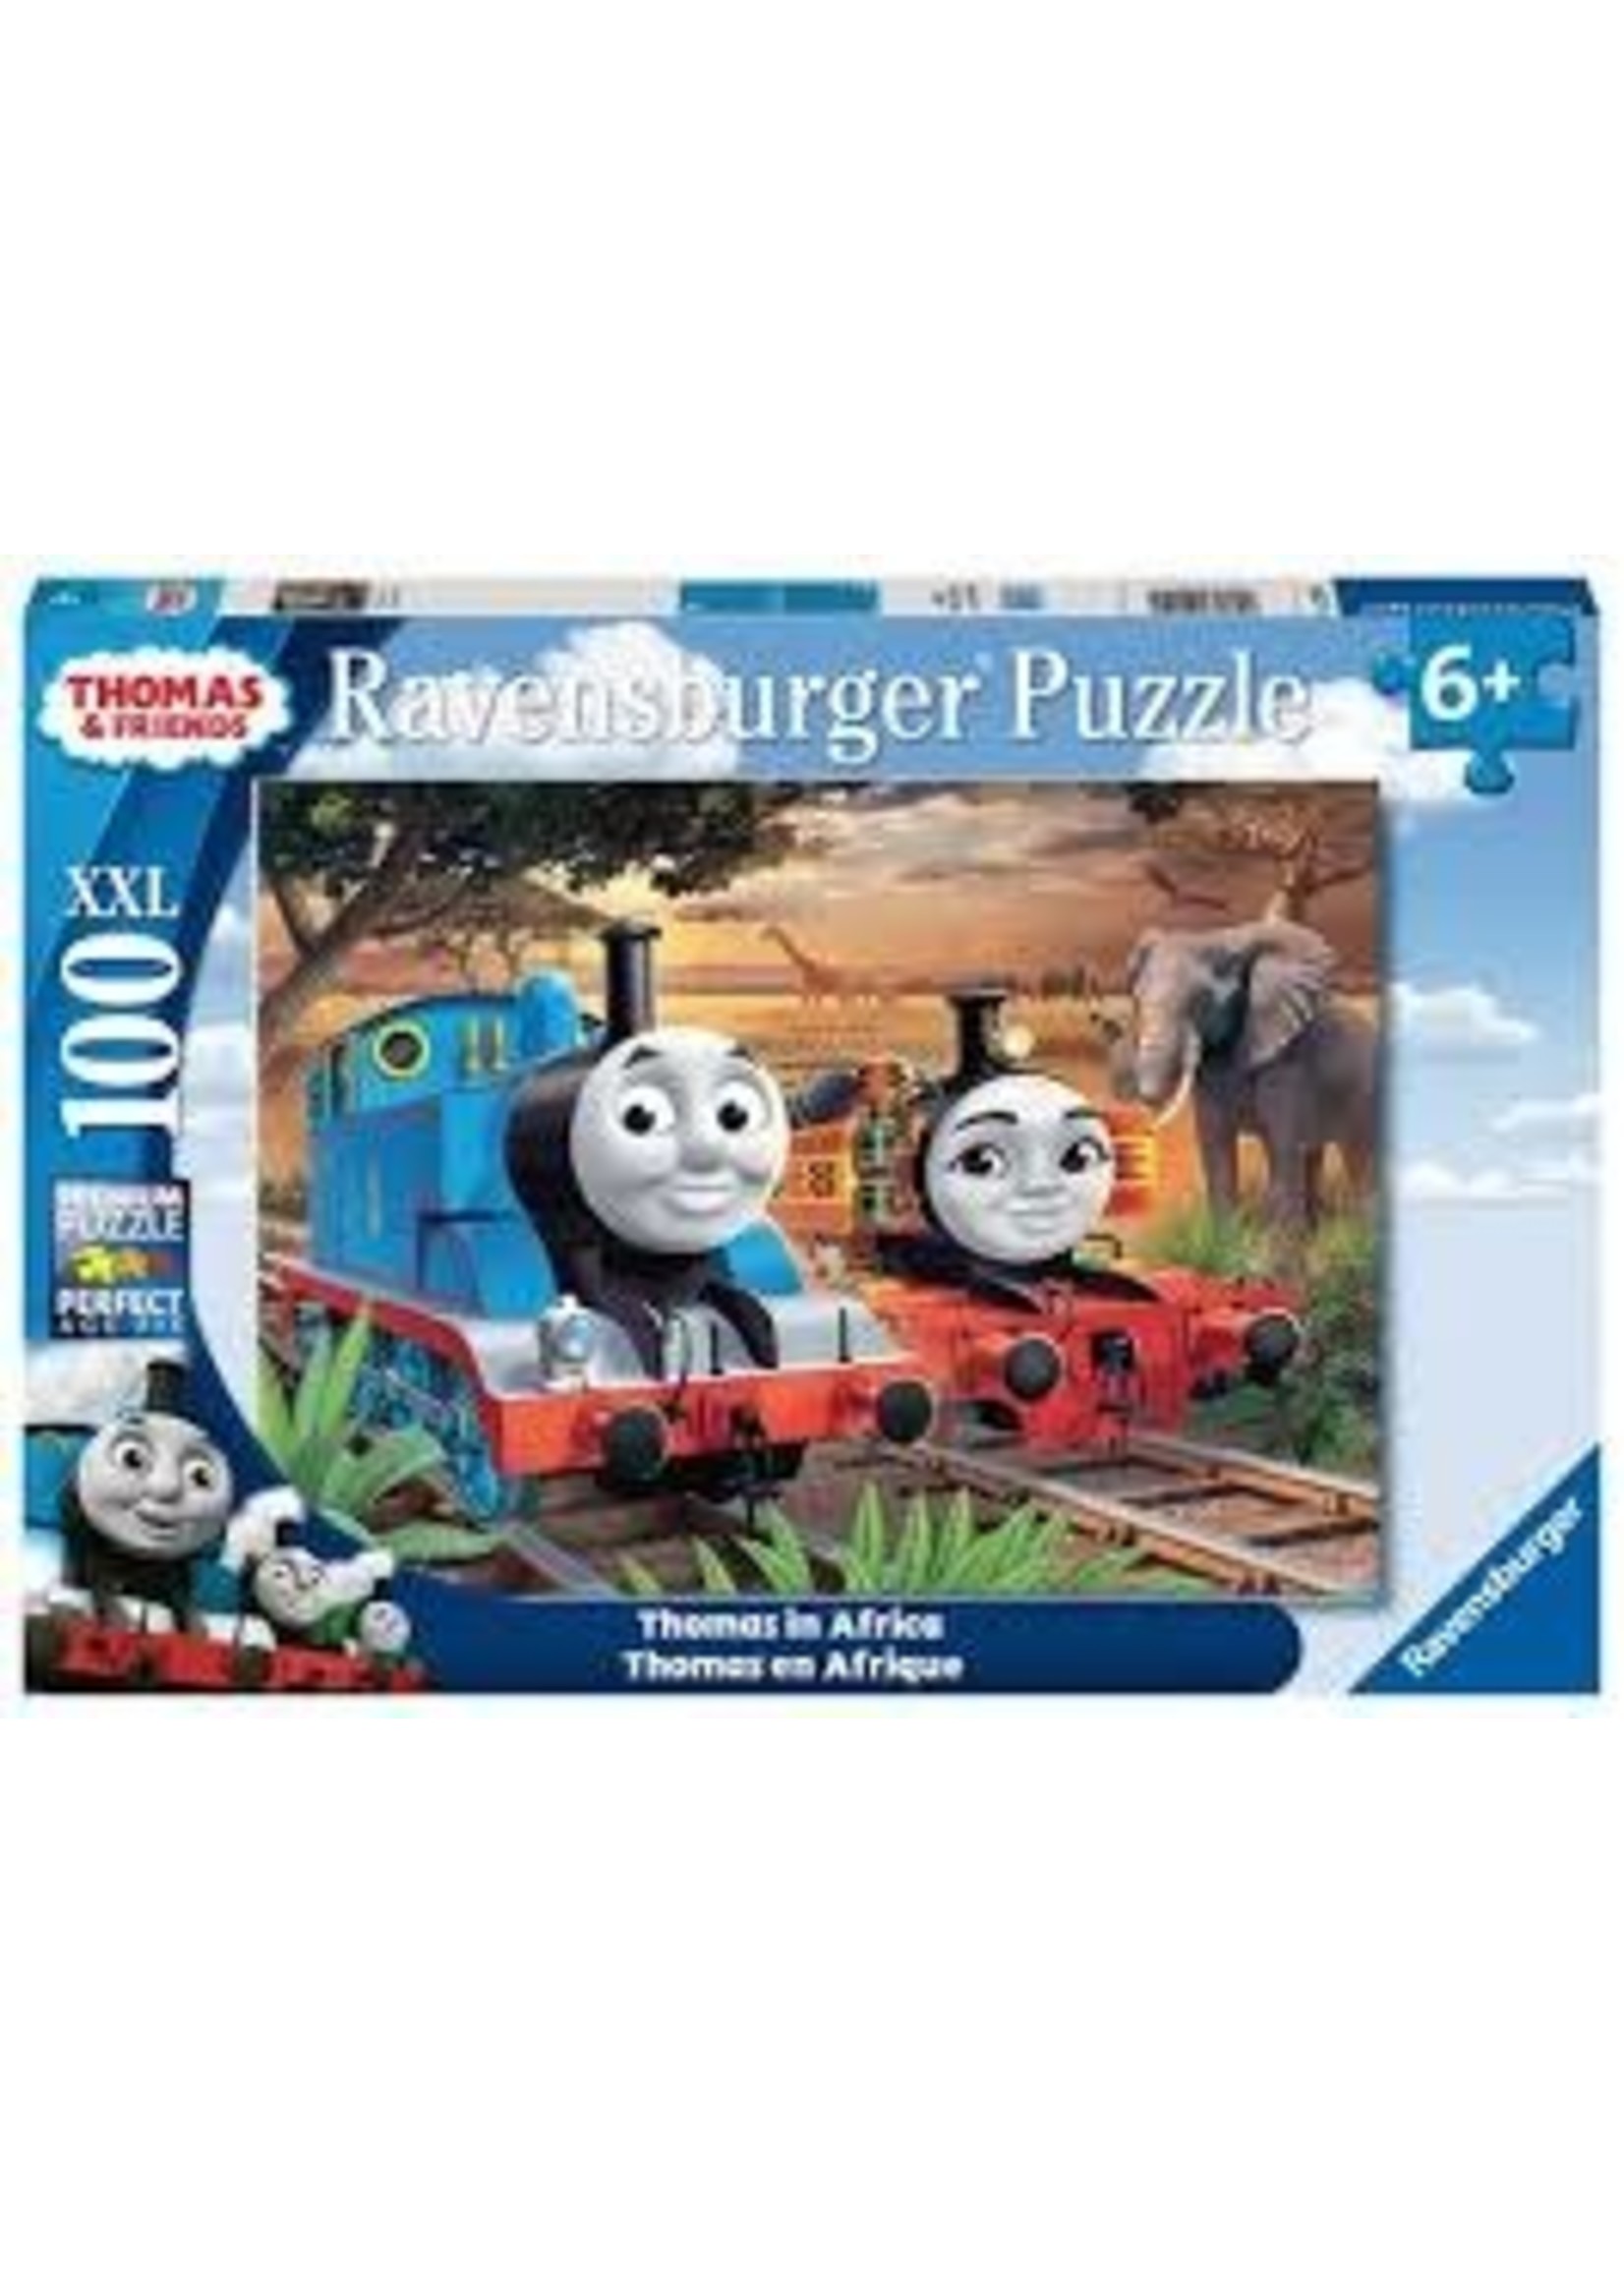 Ravensburger 100pc XXL puzzle Thomas in Africa